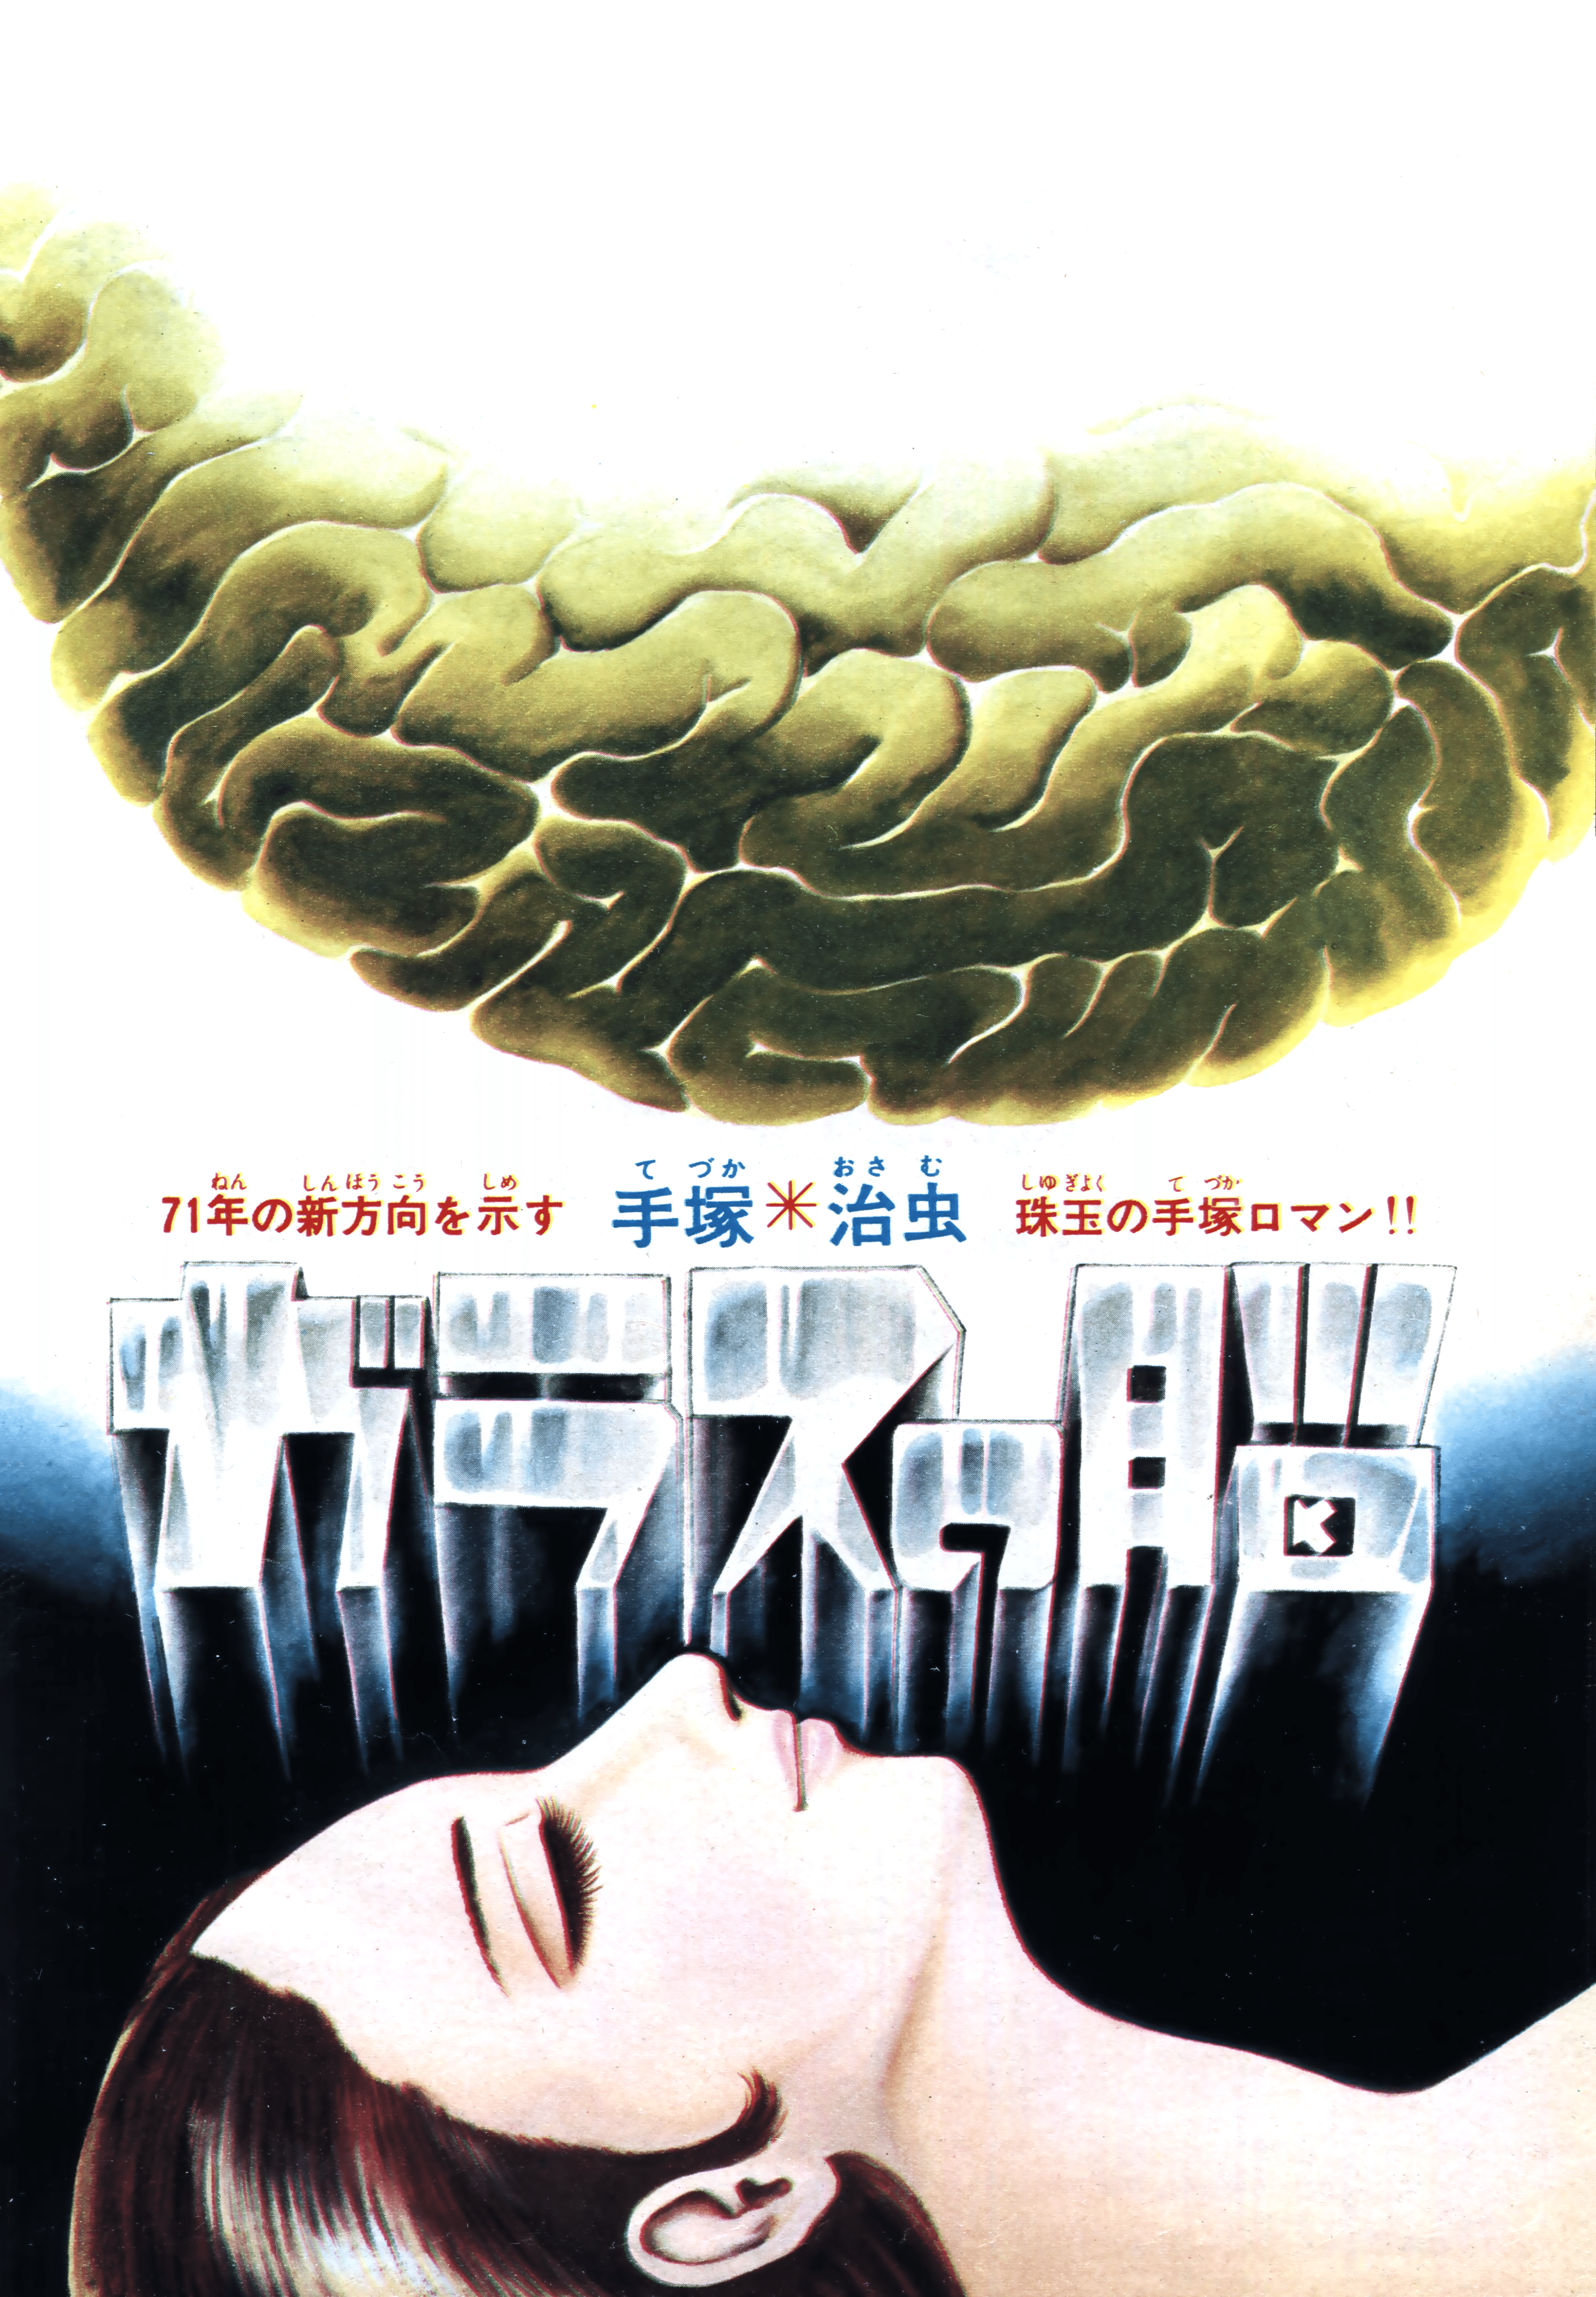 Tiger Books Vol.3 Chapter 10: Glass Brain (Shonen Sunday Special Reprint, 10/20/1975) - Picture 2